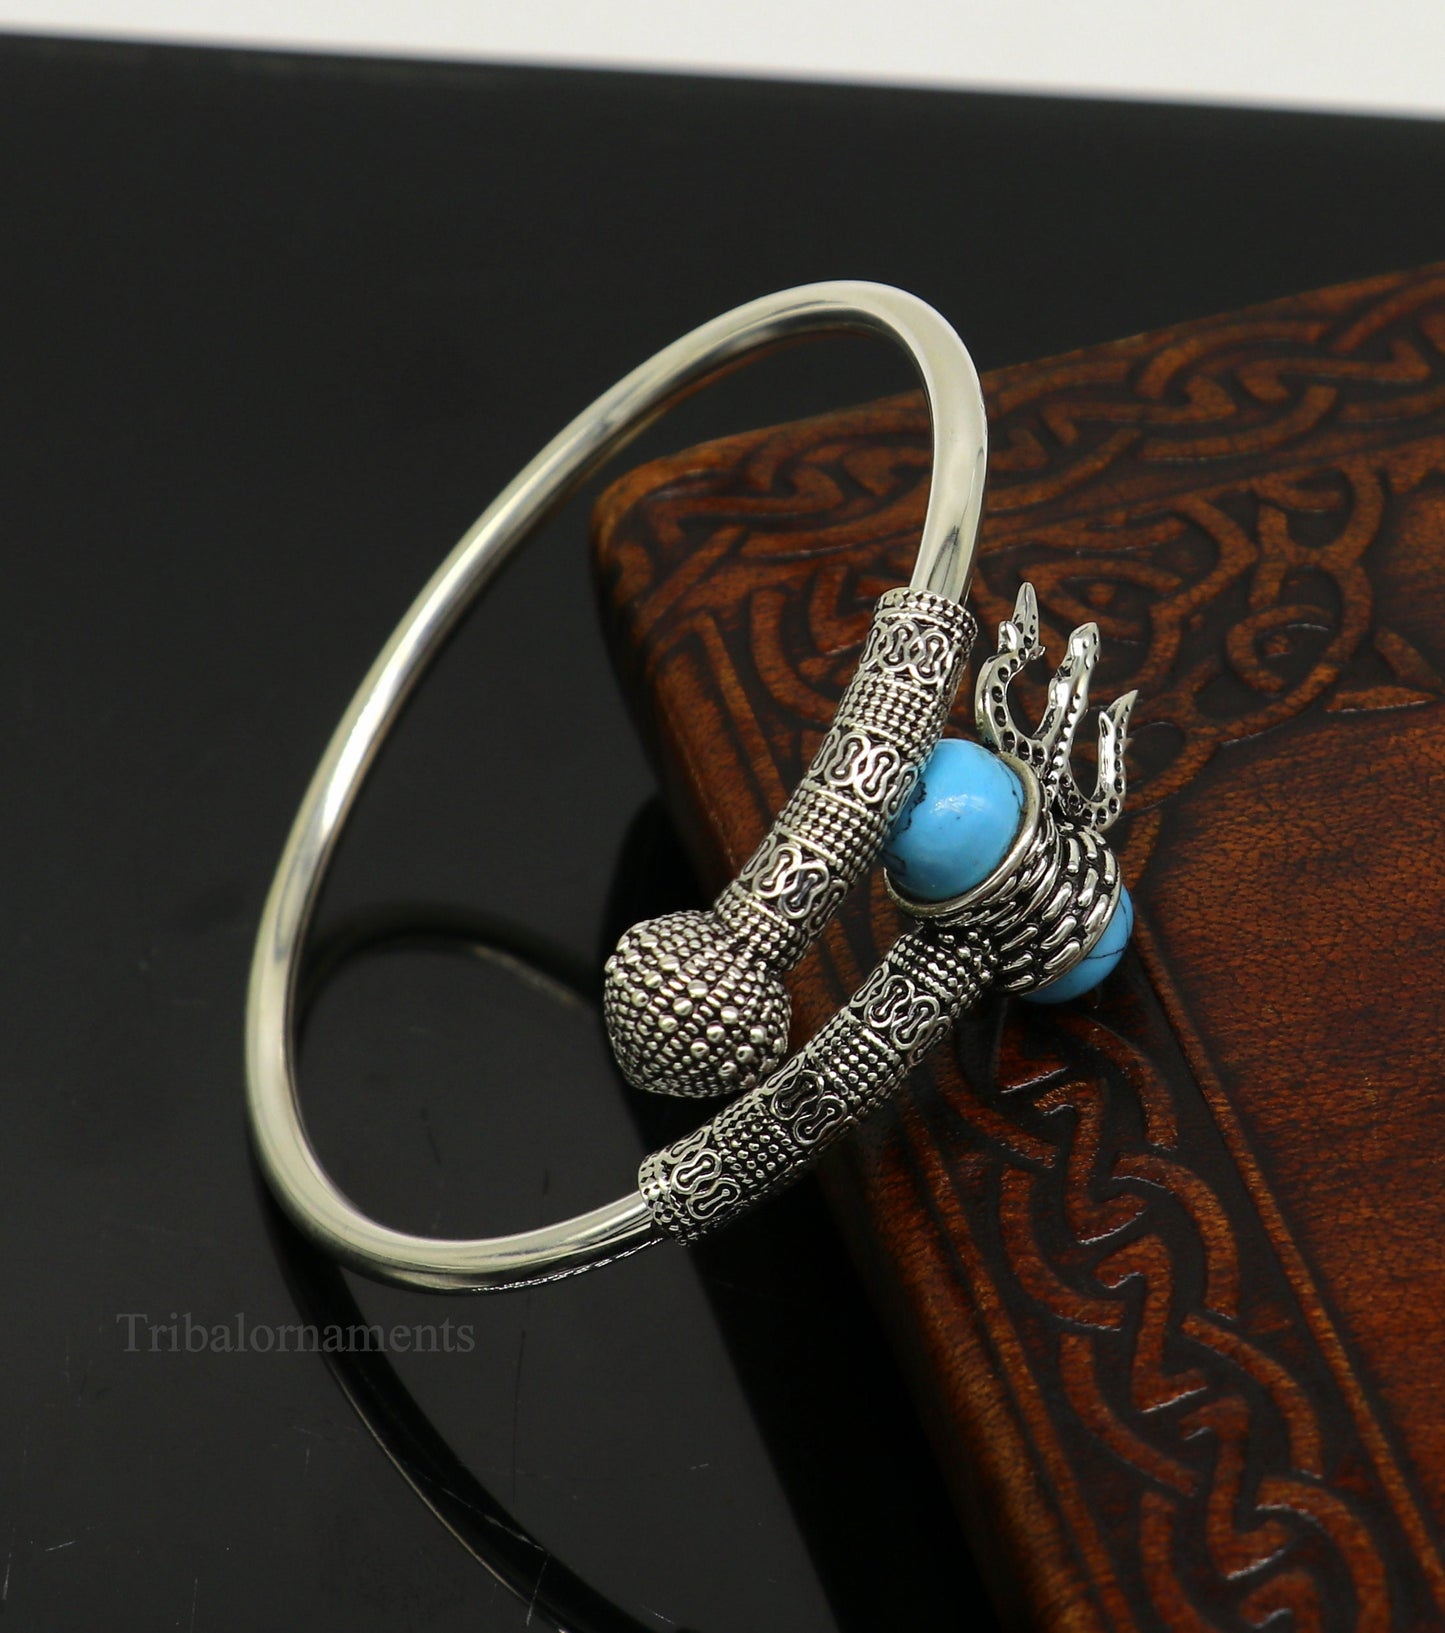 925 sterling silver Vintage design handmade lord Shiva trident kada, bahubali kada bangle Trishul bracelet jewelry turquoise kada nssk494 - TRIBAL ORNAMENTS